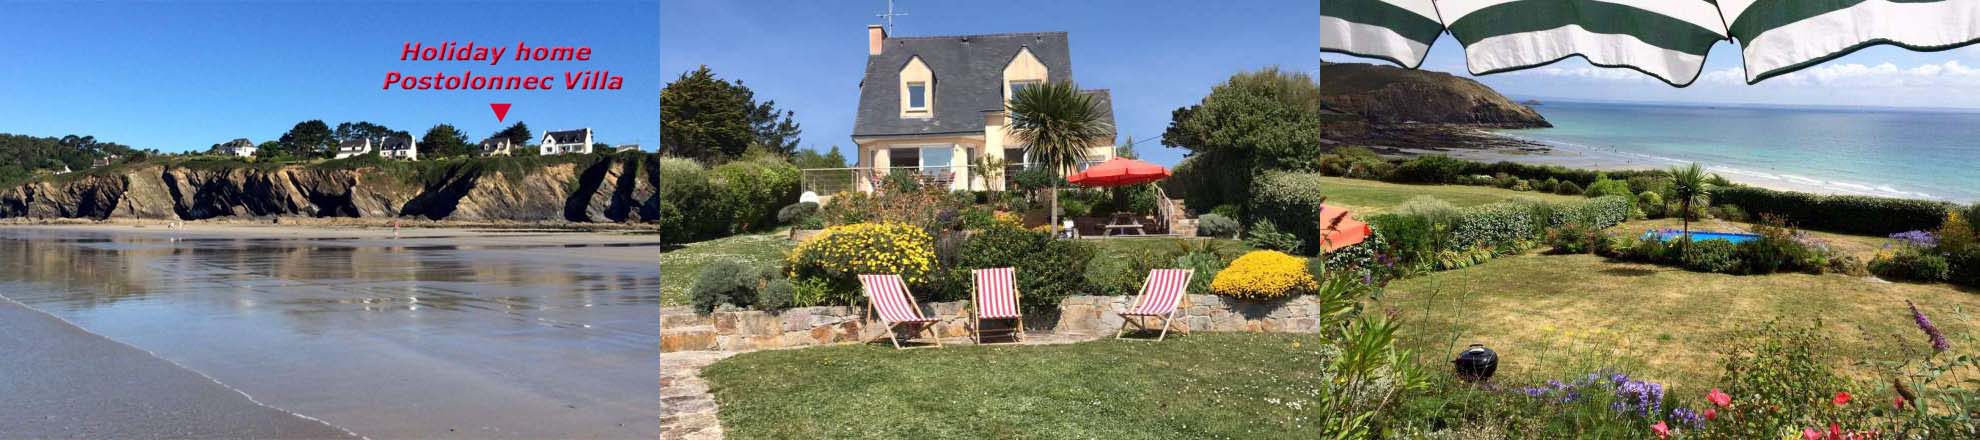 Brittany Holiday-home: Postolonnec Villa on the Crozon peninsula